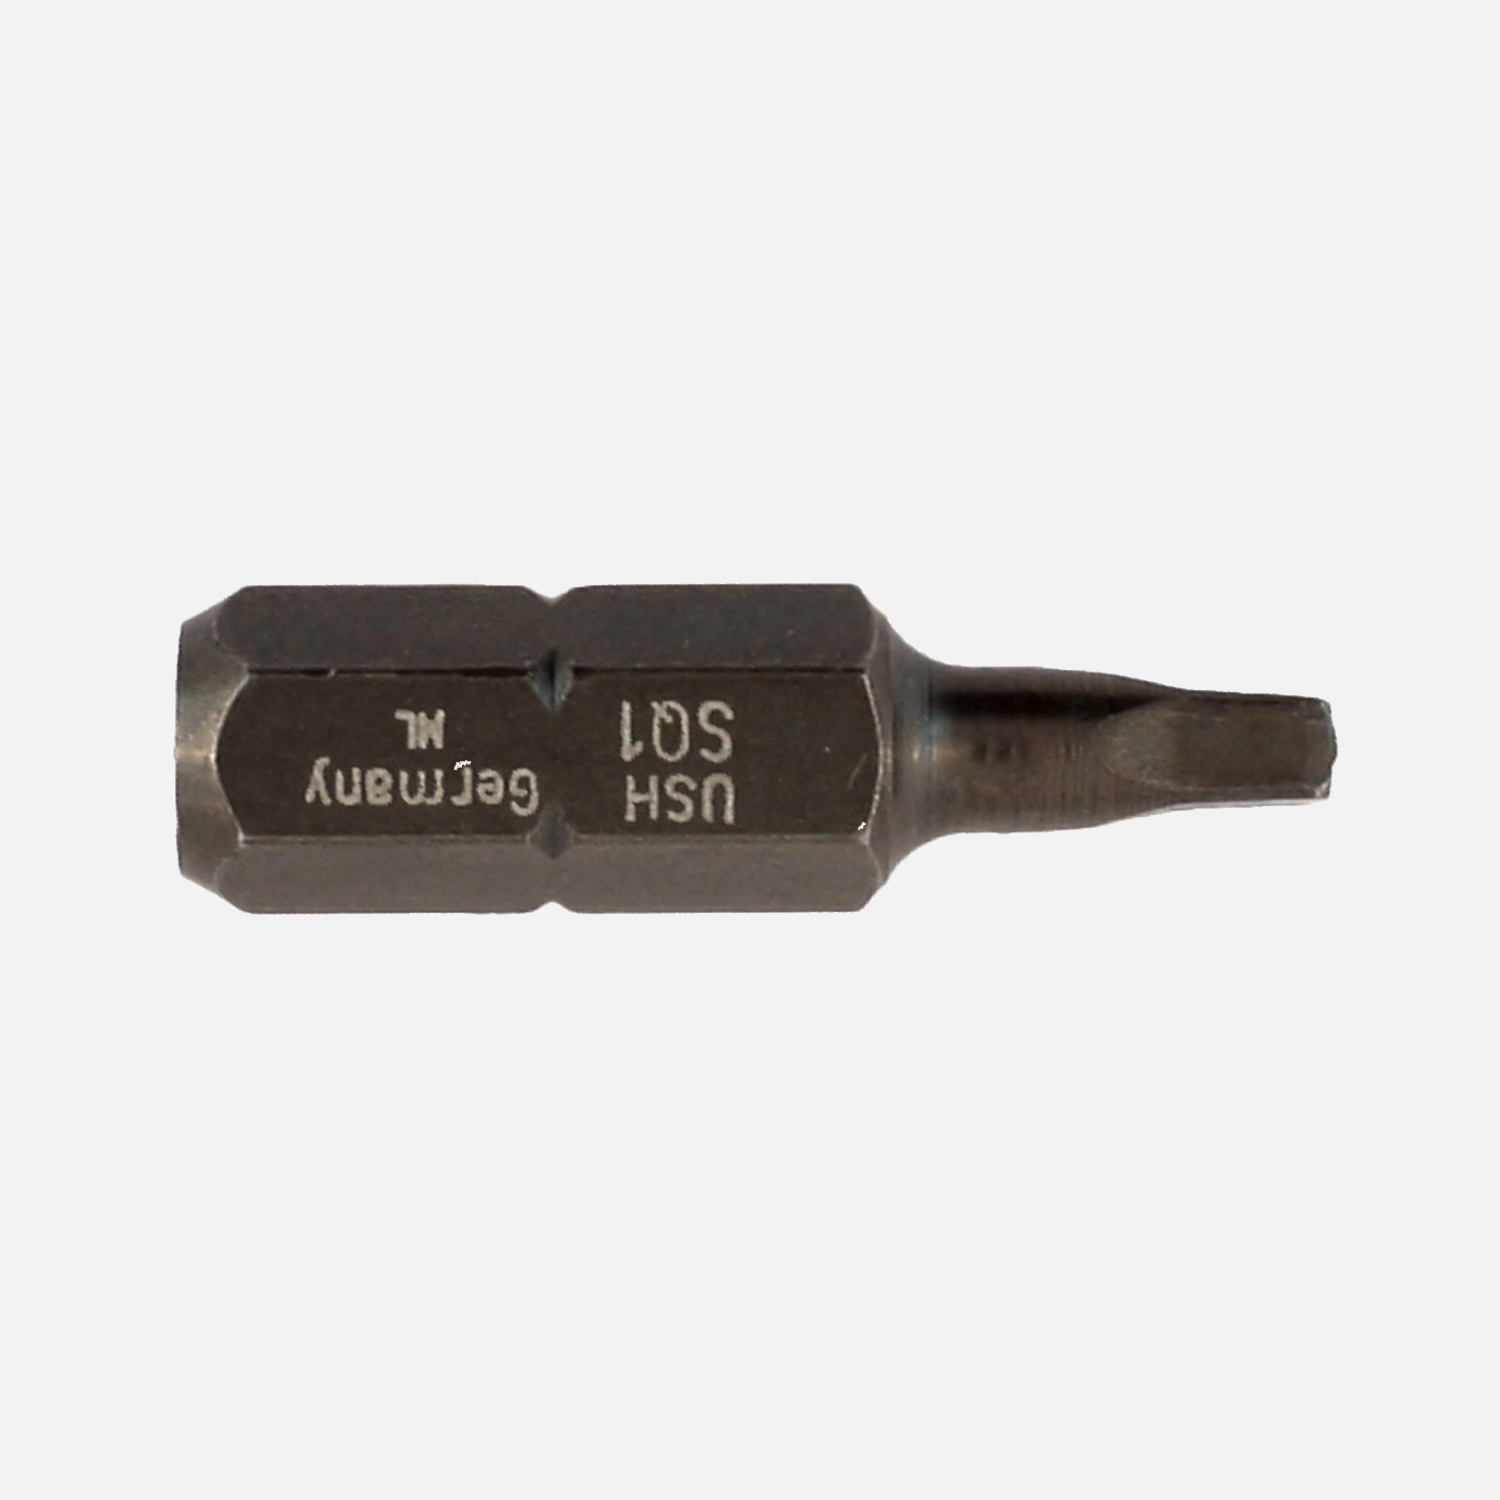 1 Robertson Torsionsbit - Industrie Bits - Gr. 1 1/4" 25mm High Quality